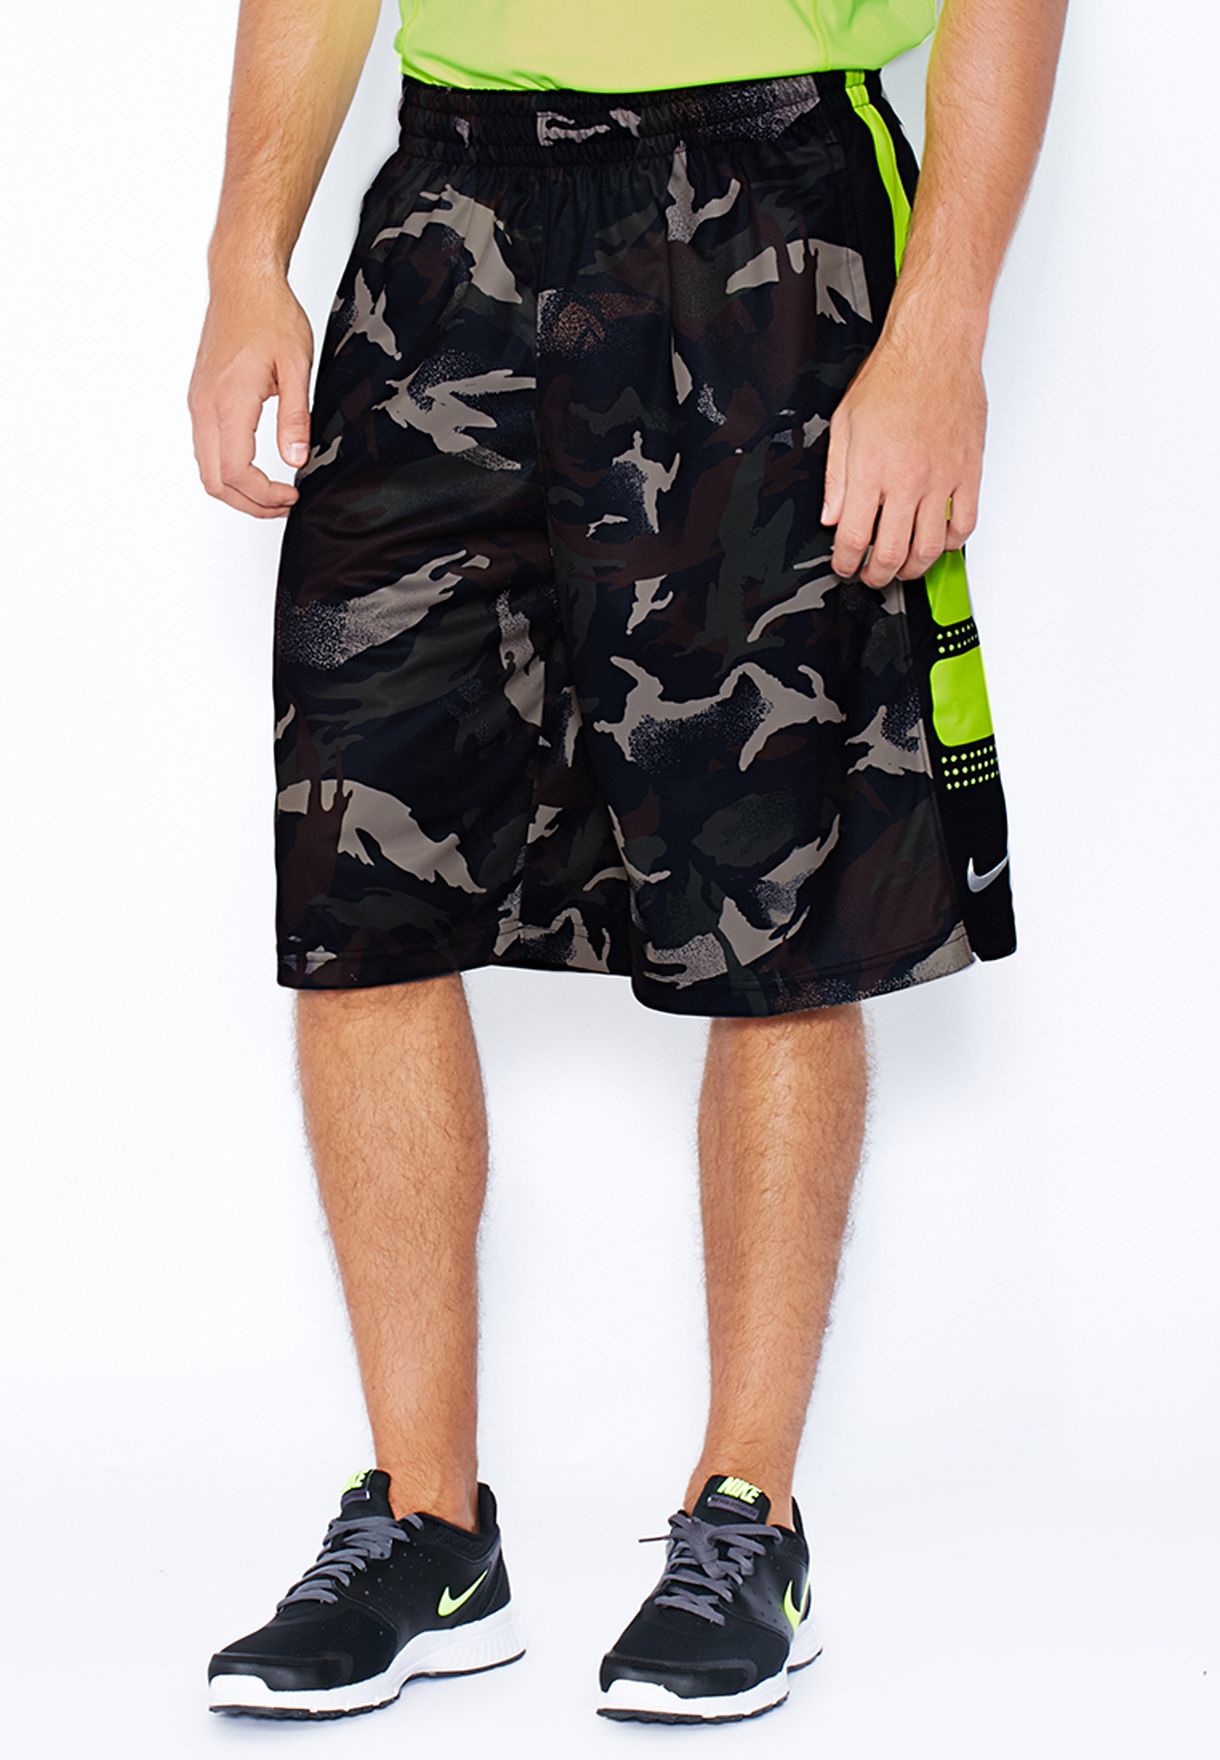 Nike prints Elite Stripe Camo Shorts 